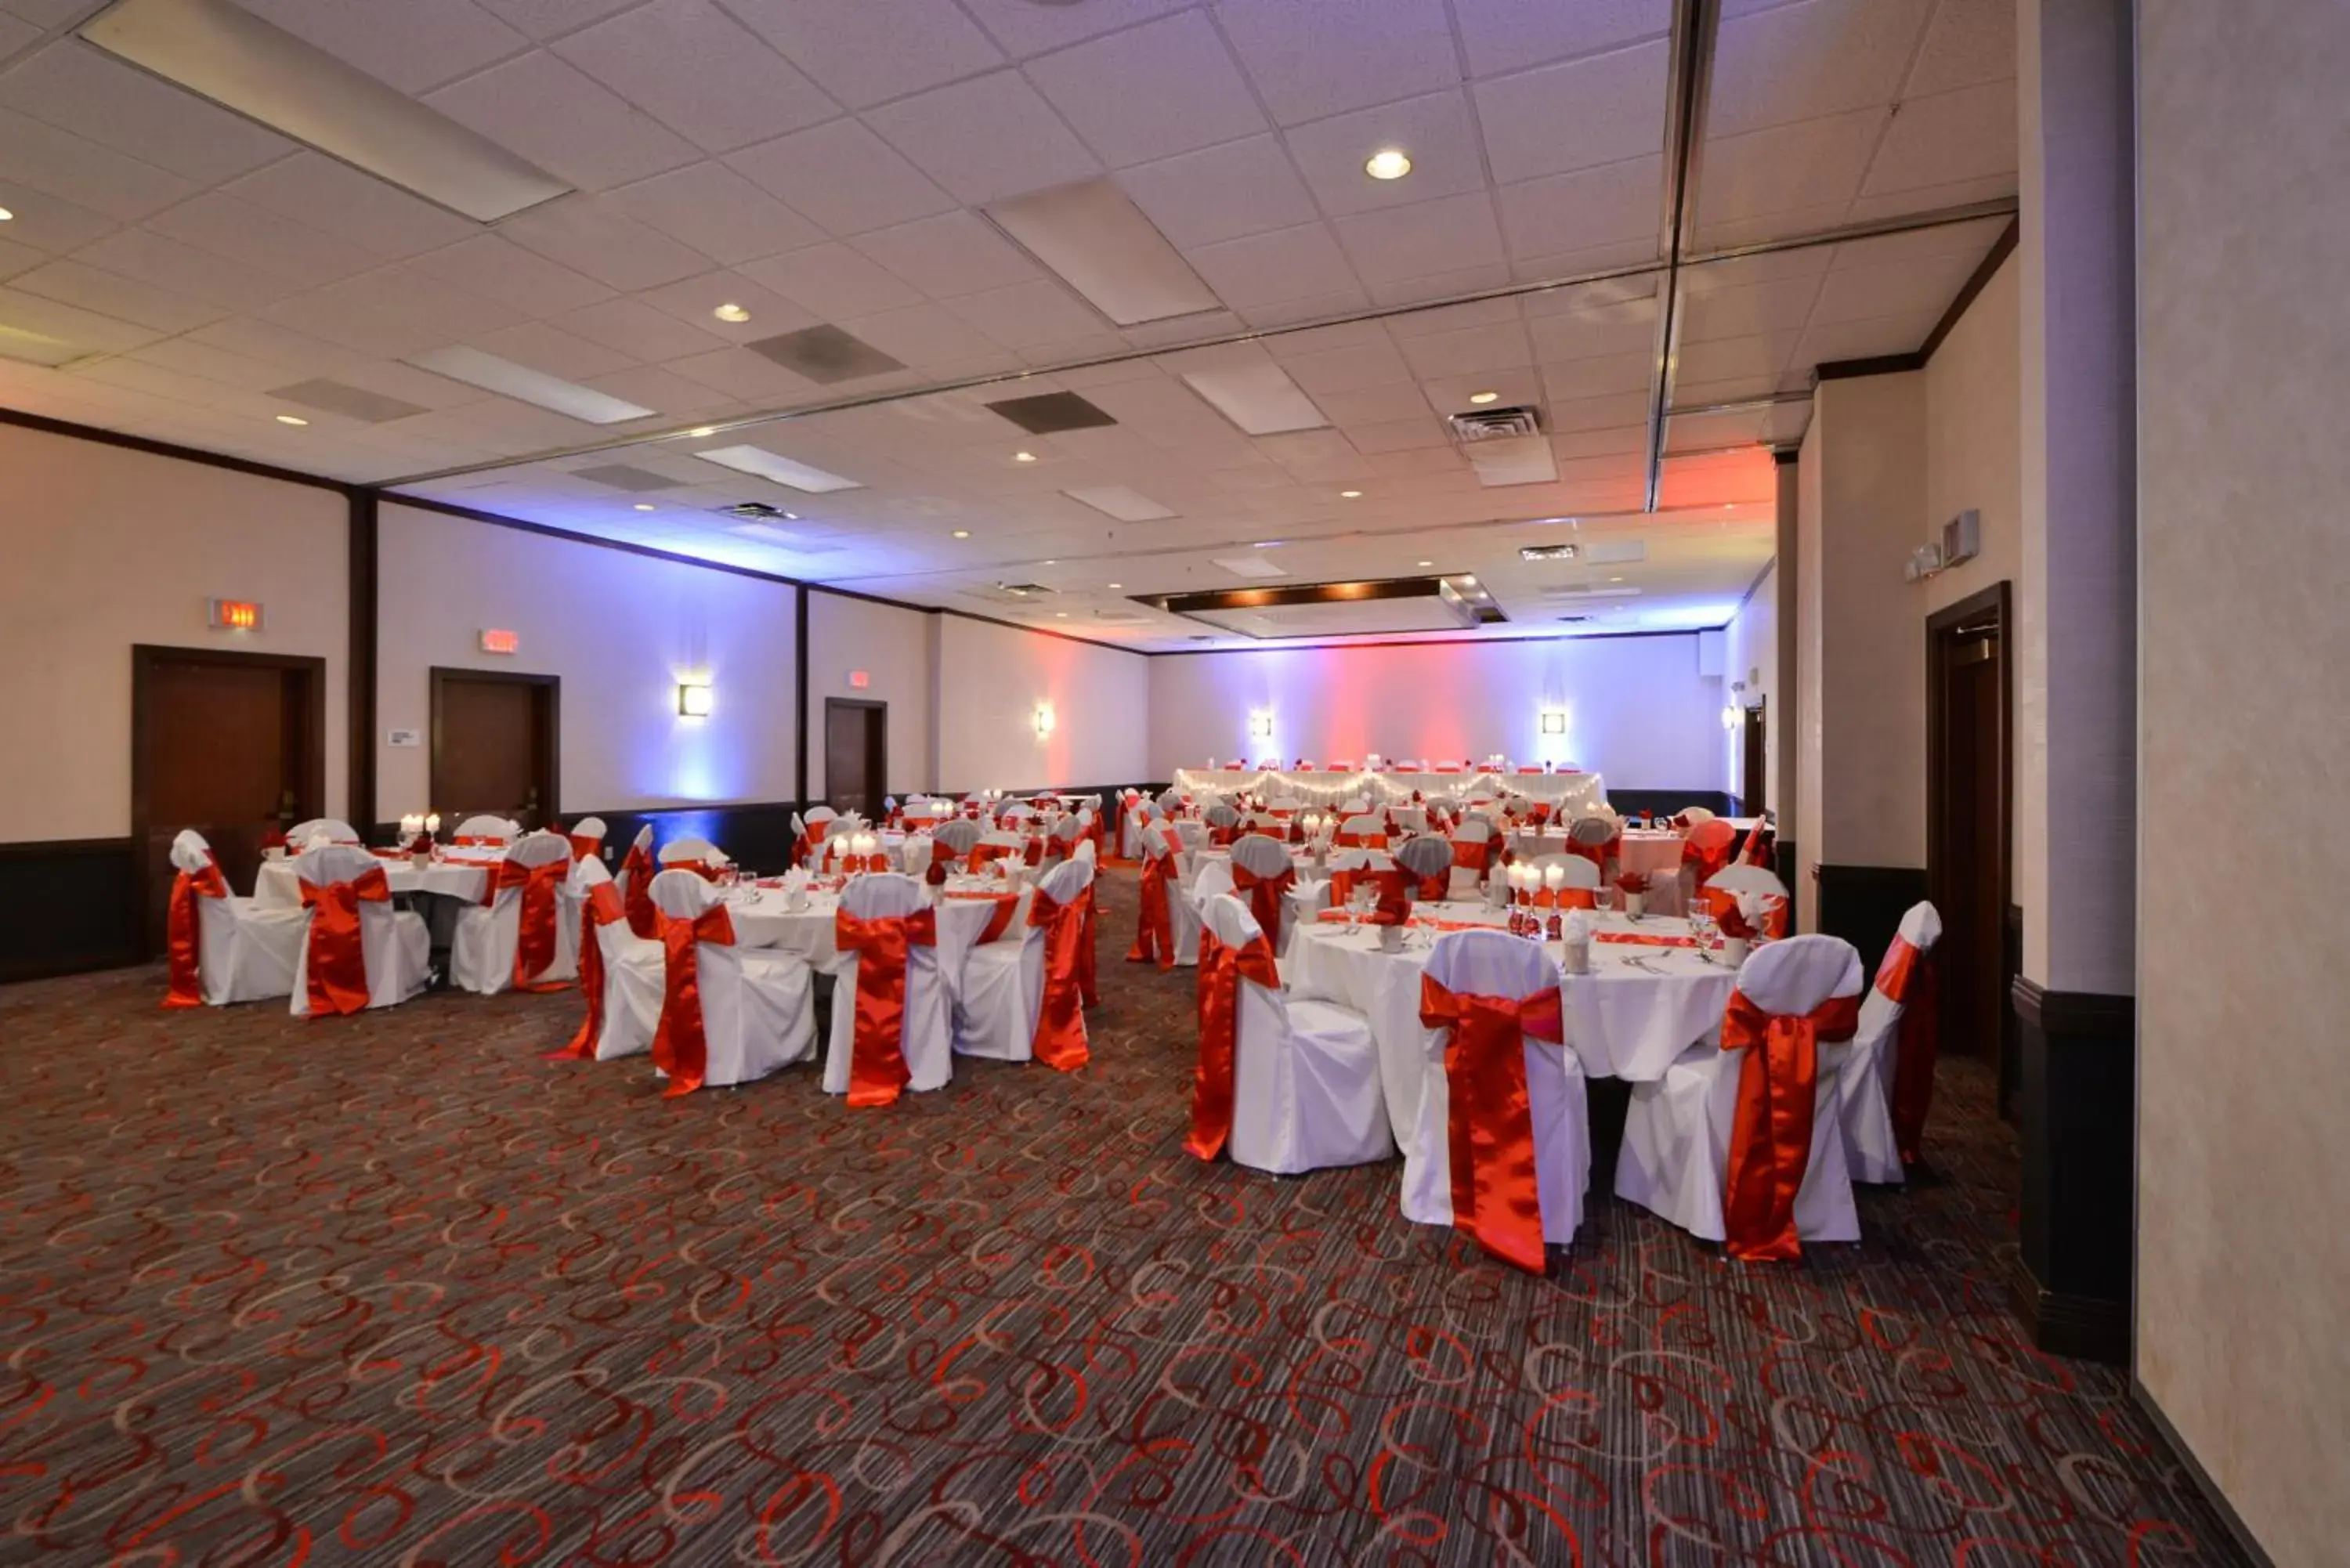 Banquet/Function facilities, Banquet Facilities in Radisson Hotel Madison